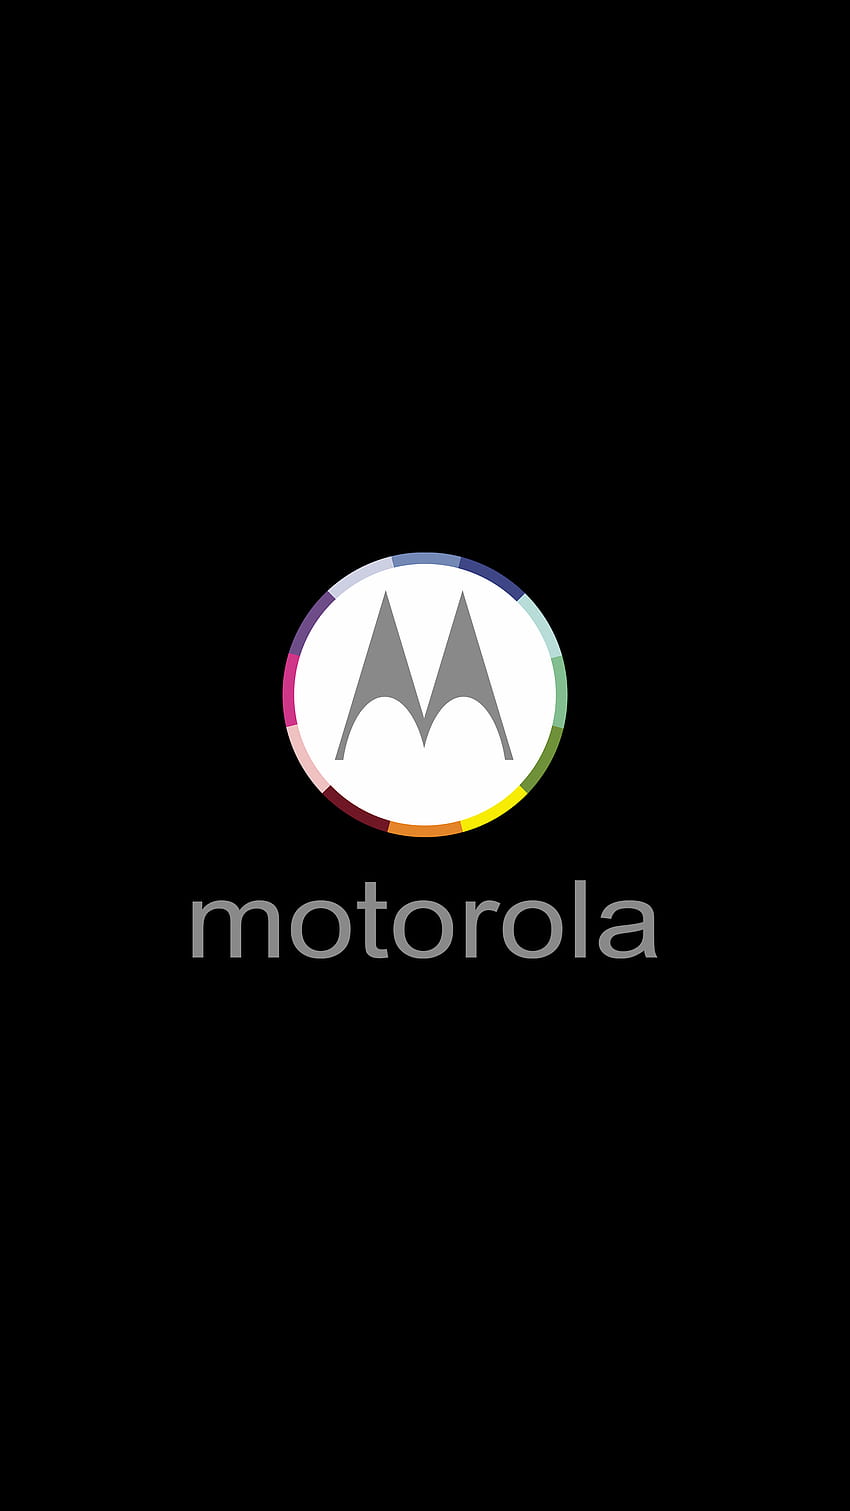 Download wallpapers Motorola logo, steel logo, brands, steel art, gray  stone background, creative art, Motorola, emblems for desktop free.  Pictures for desktop free